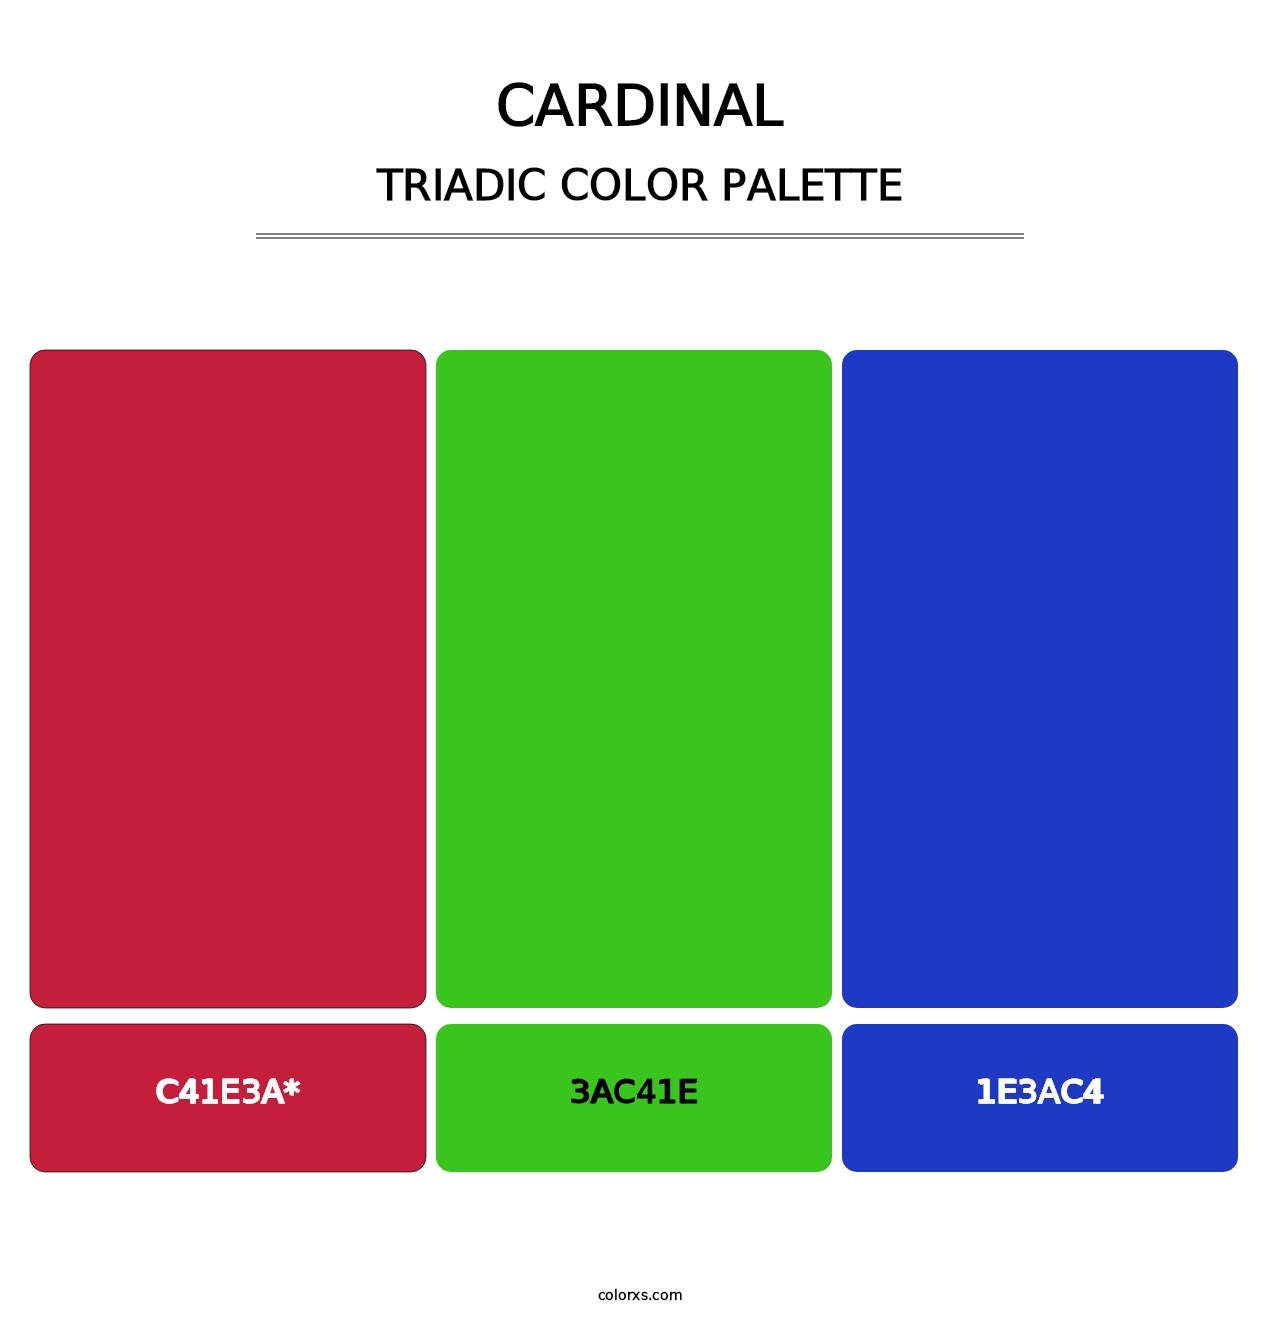 Cardinal - Triadic Color Palette